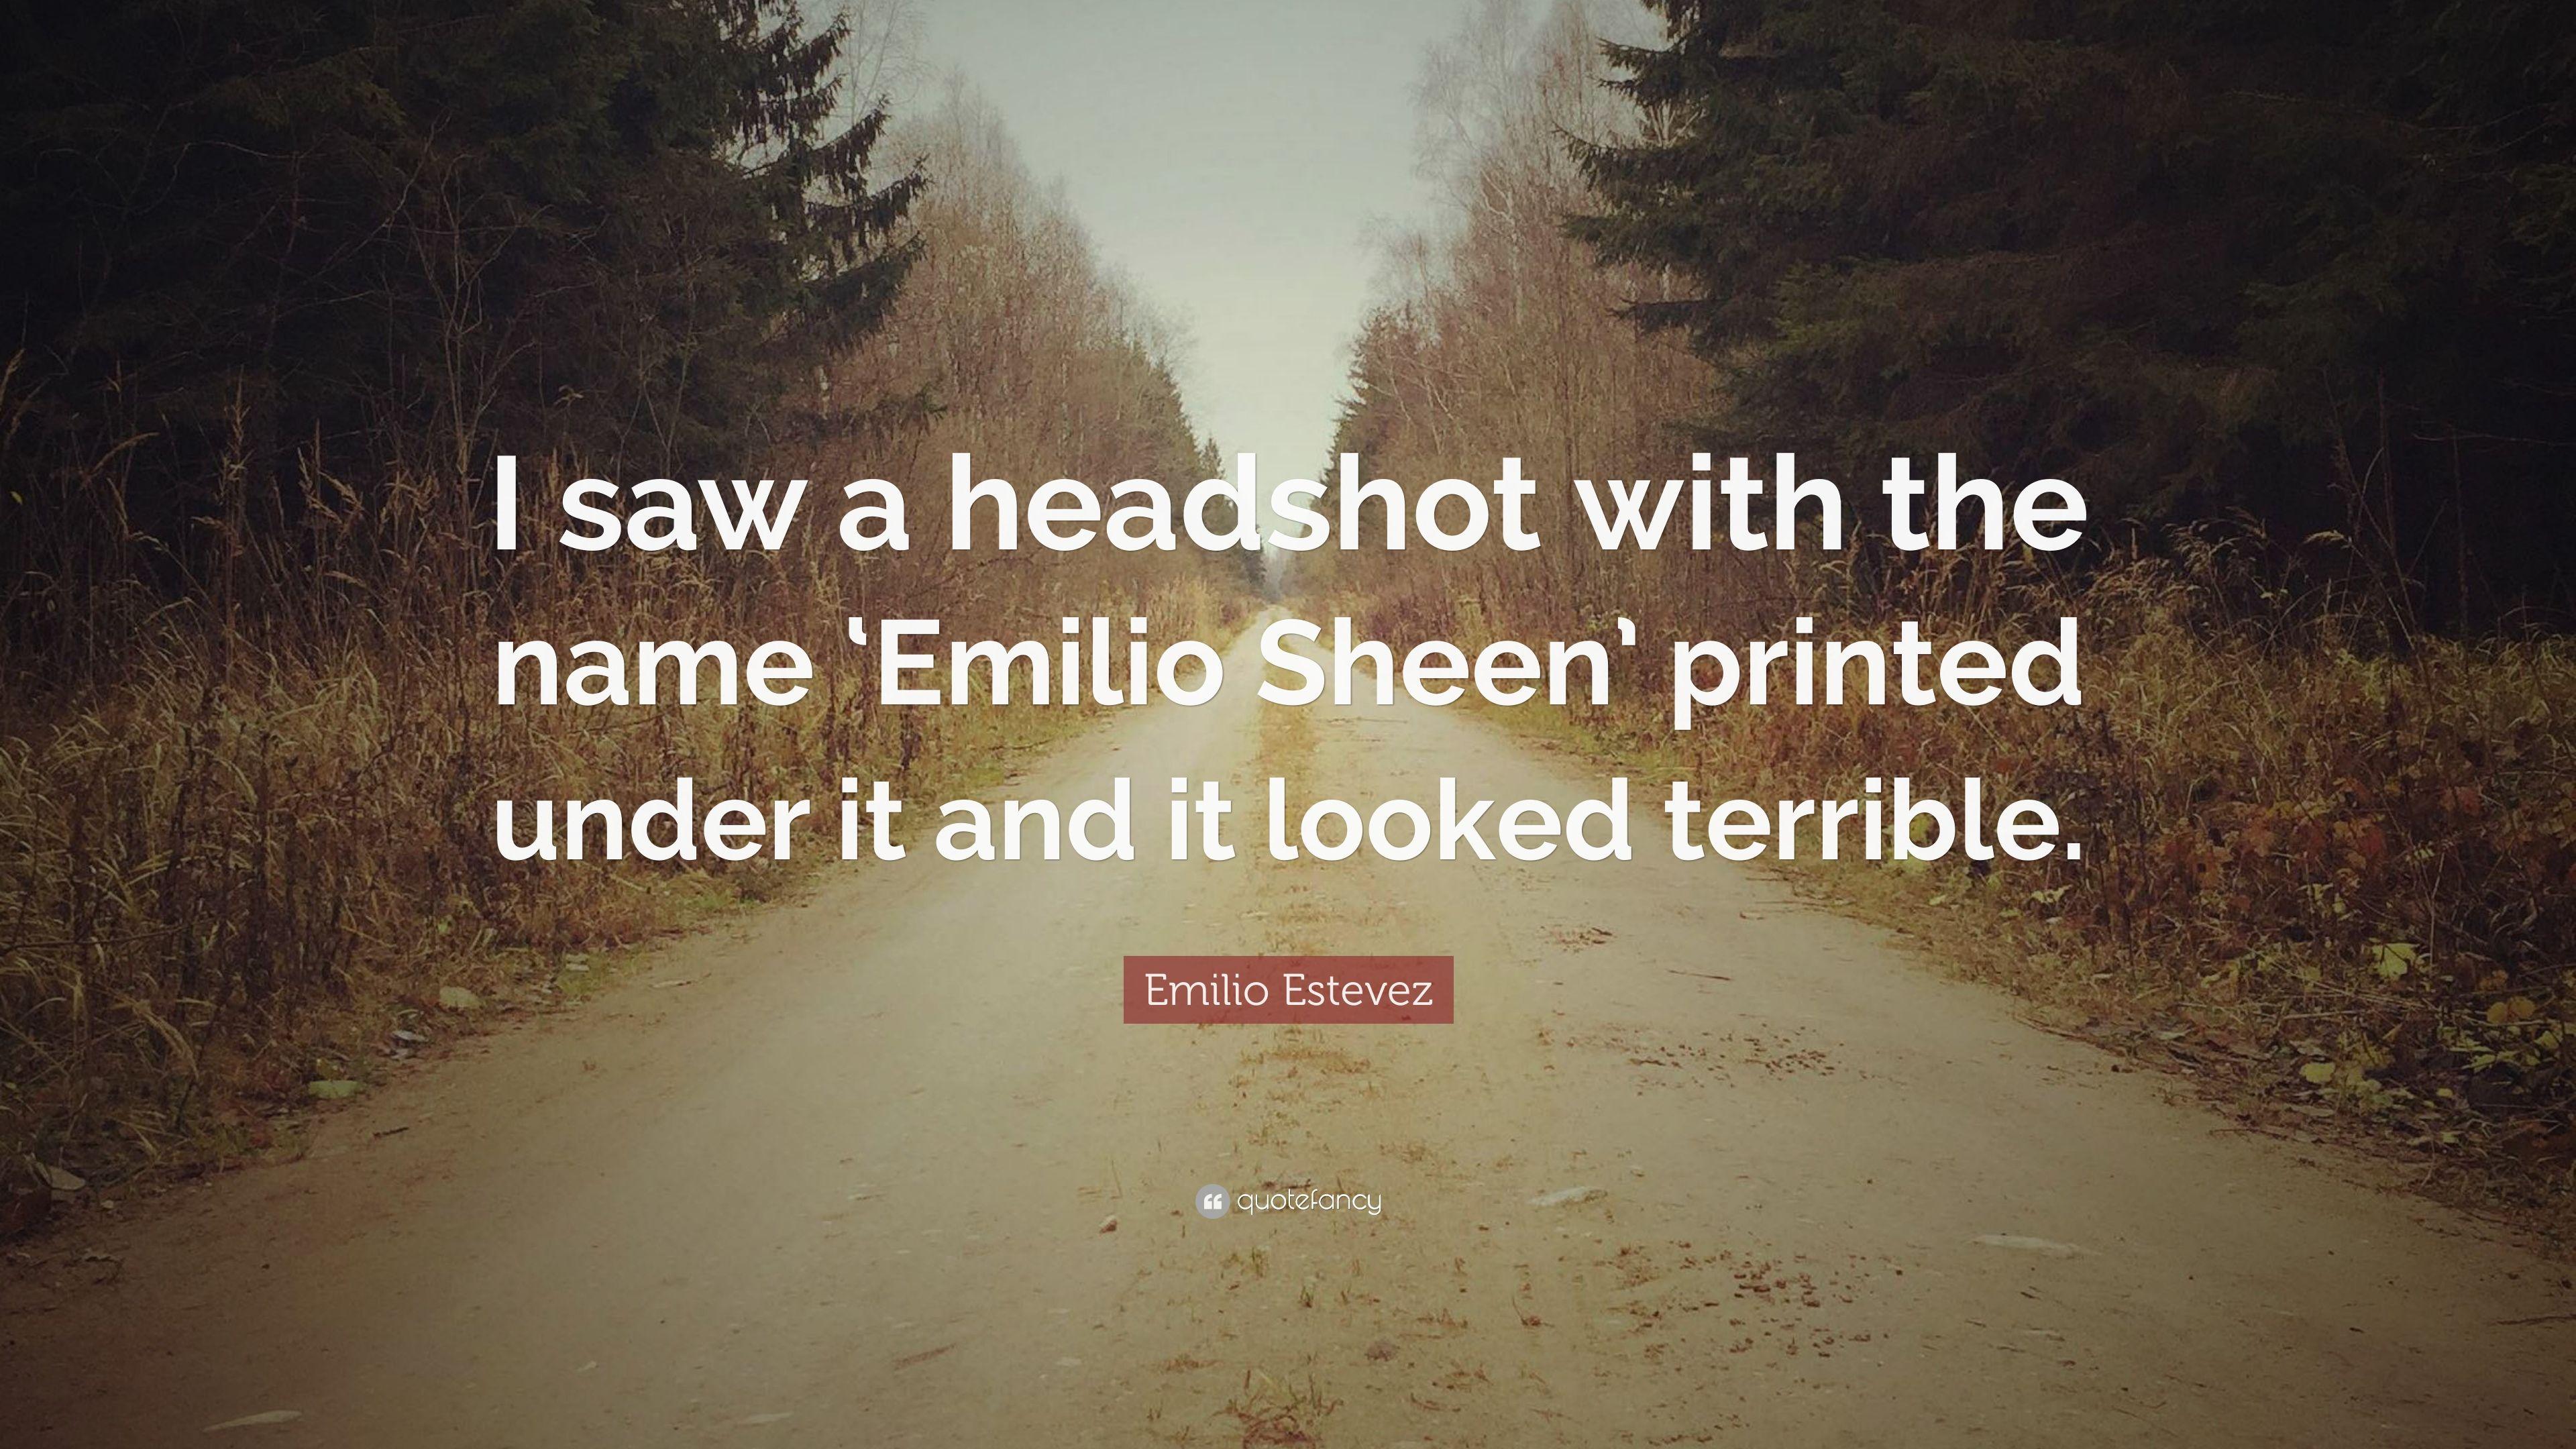 Emilio Estevez Quote: “I saw a headshot with the name 'Emilio Sheen